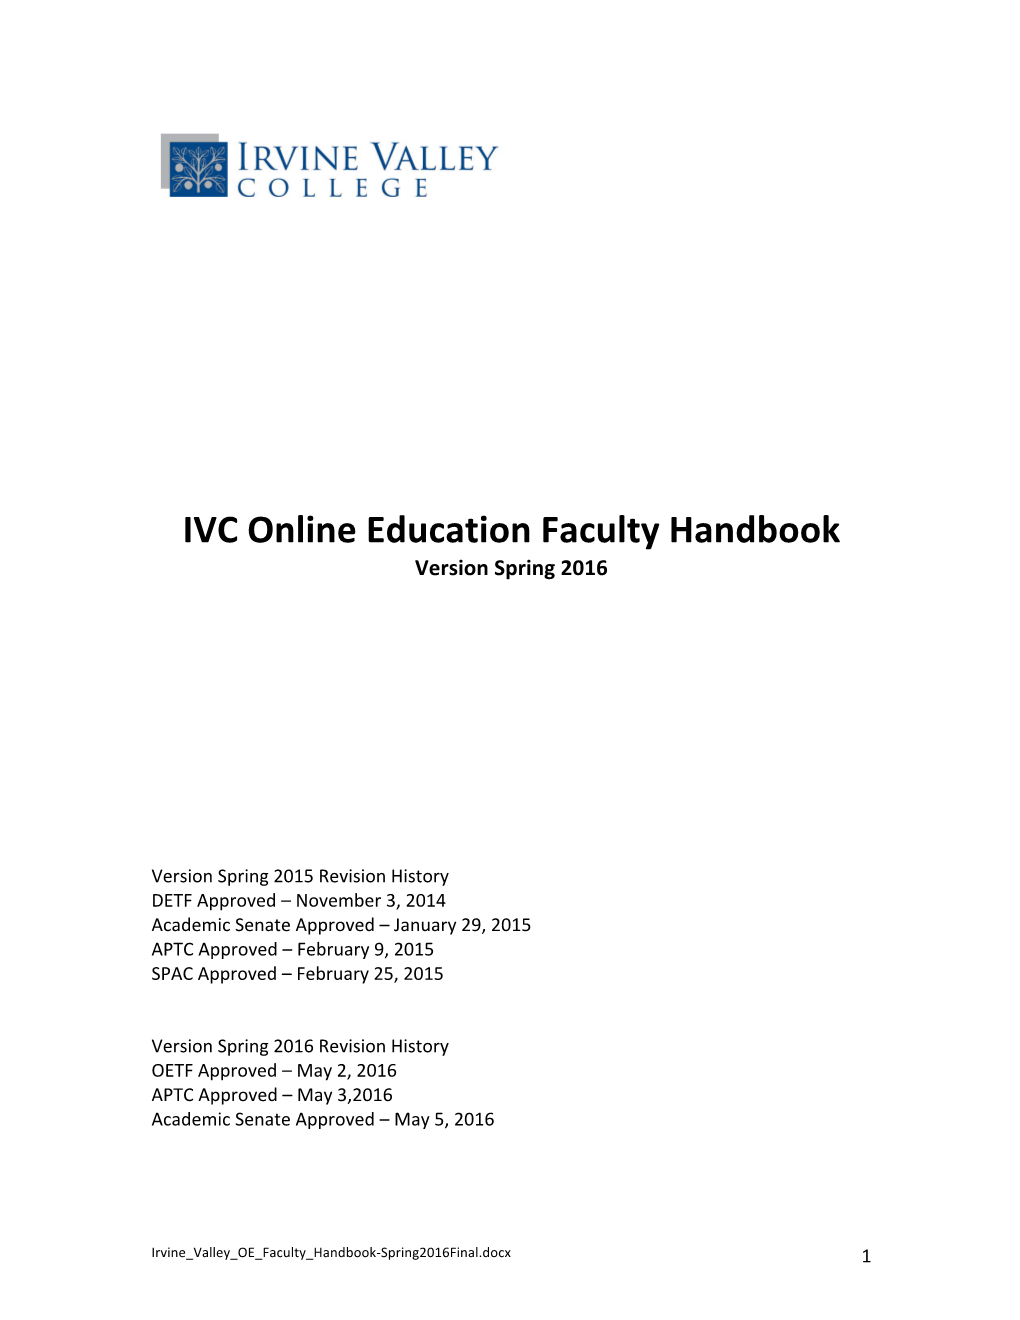 IVC Online Education Faculty Handbook Version Spring 2016